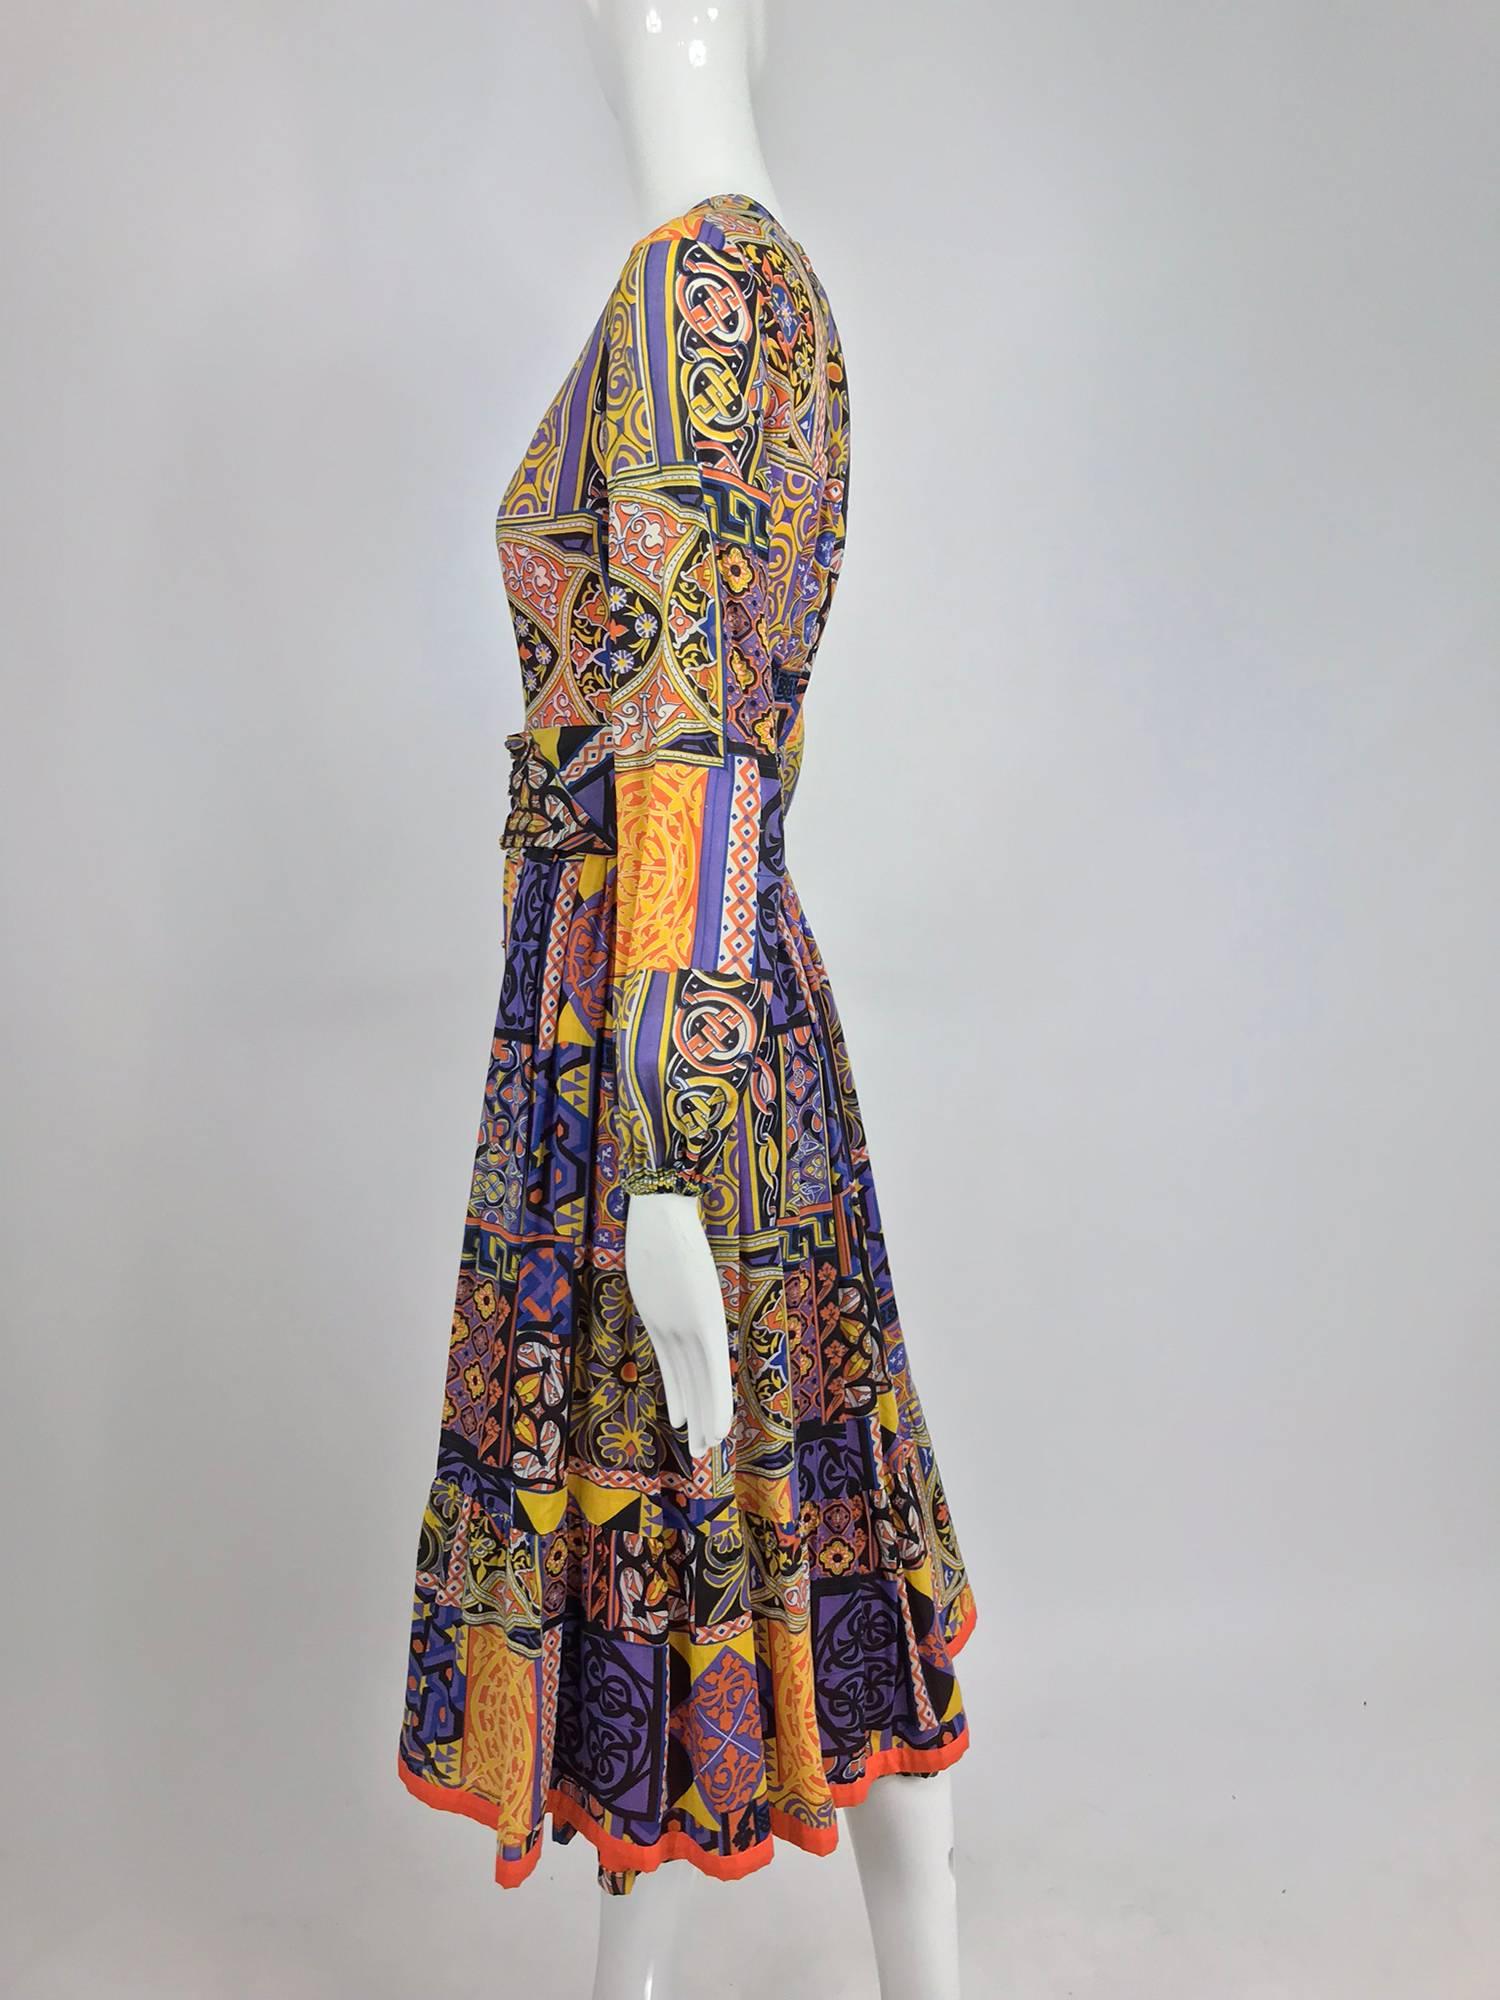 Moorish mosaic cotton print laced front bohemian dress 1960s 2